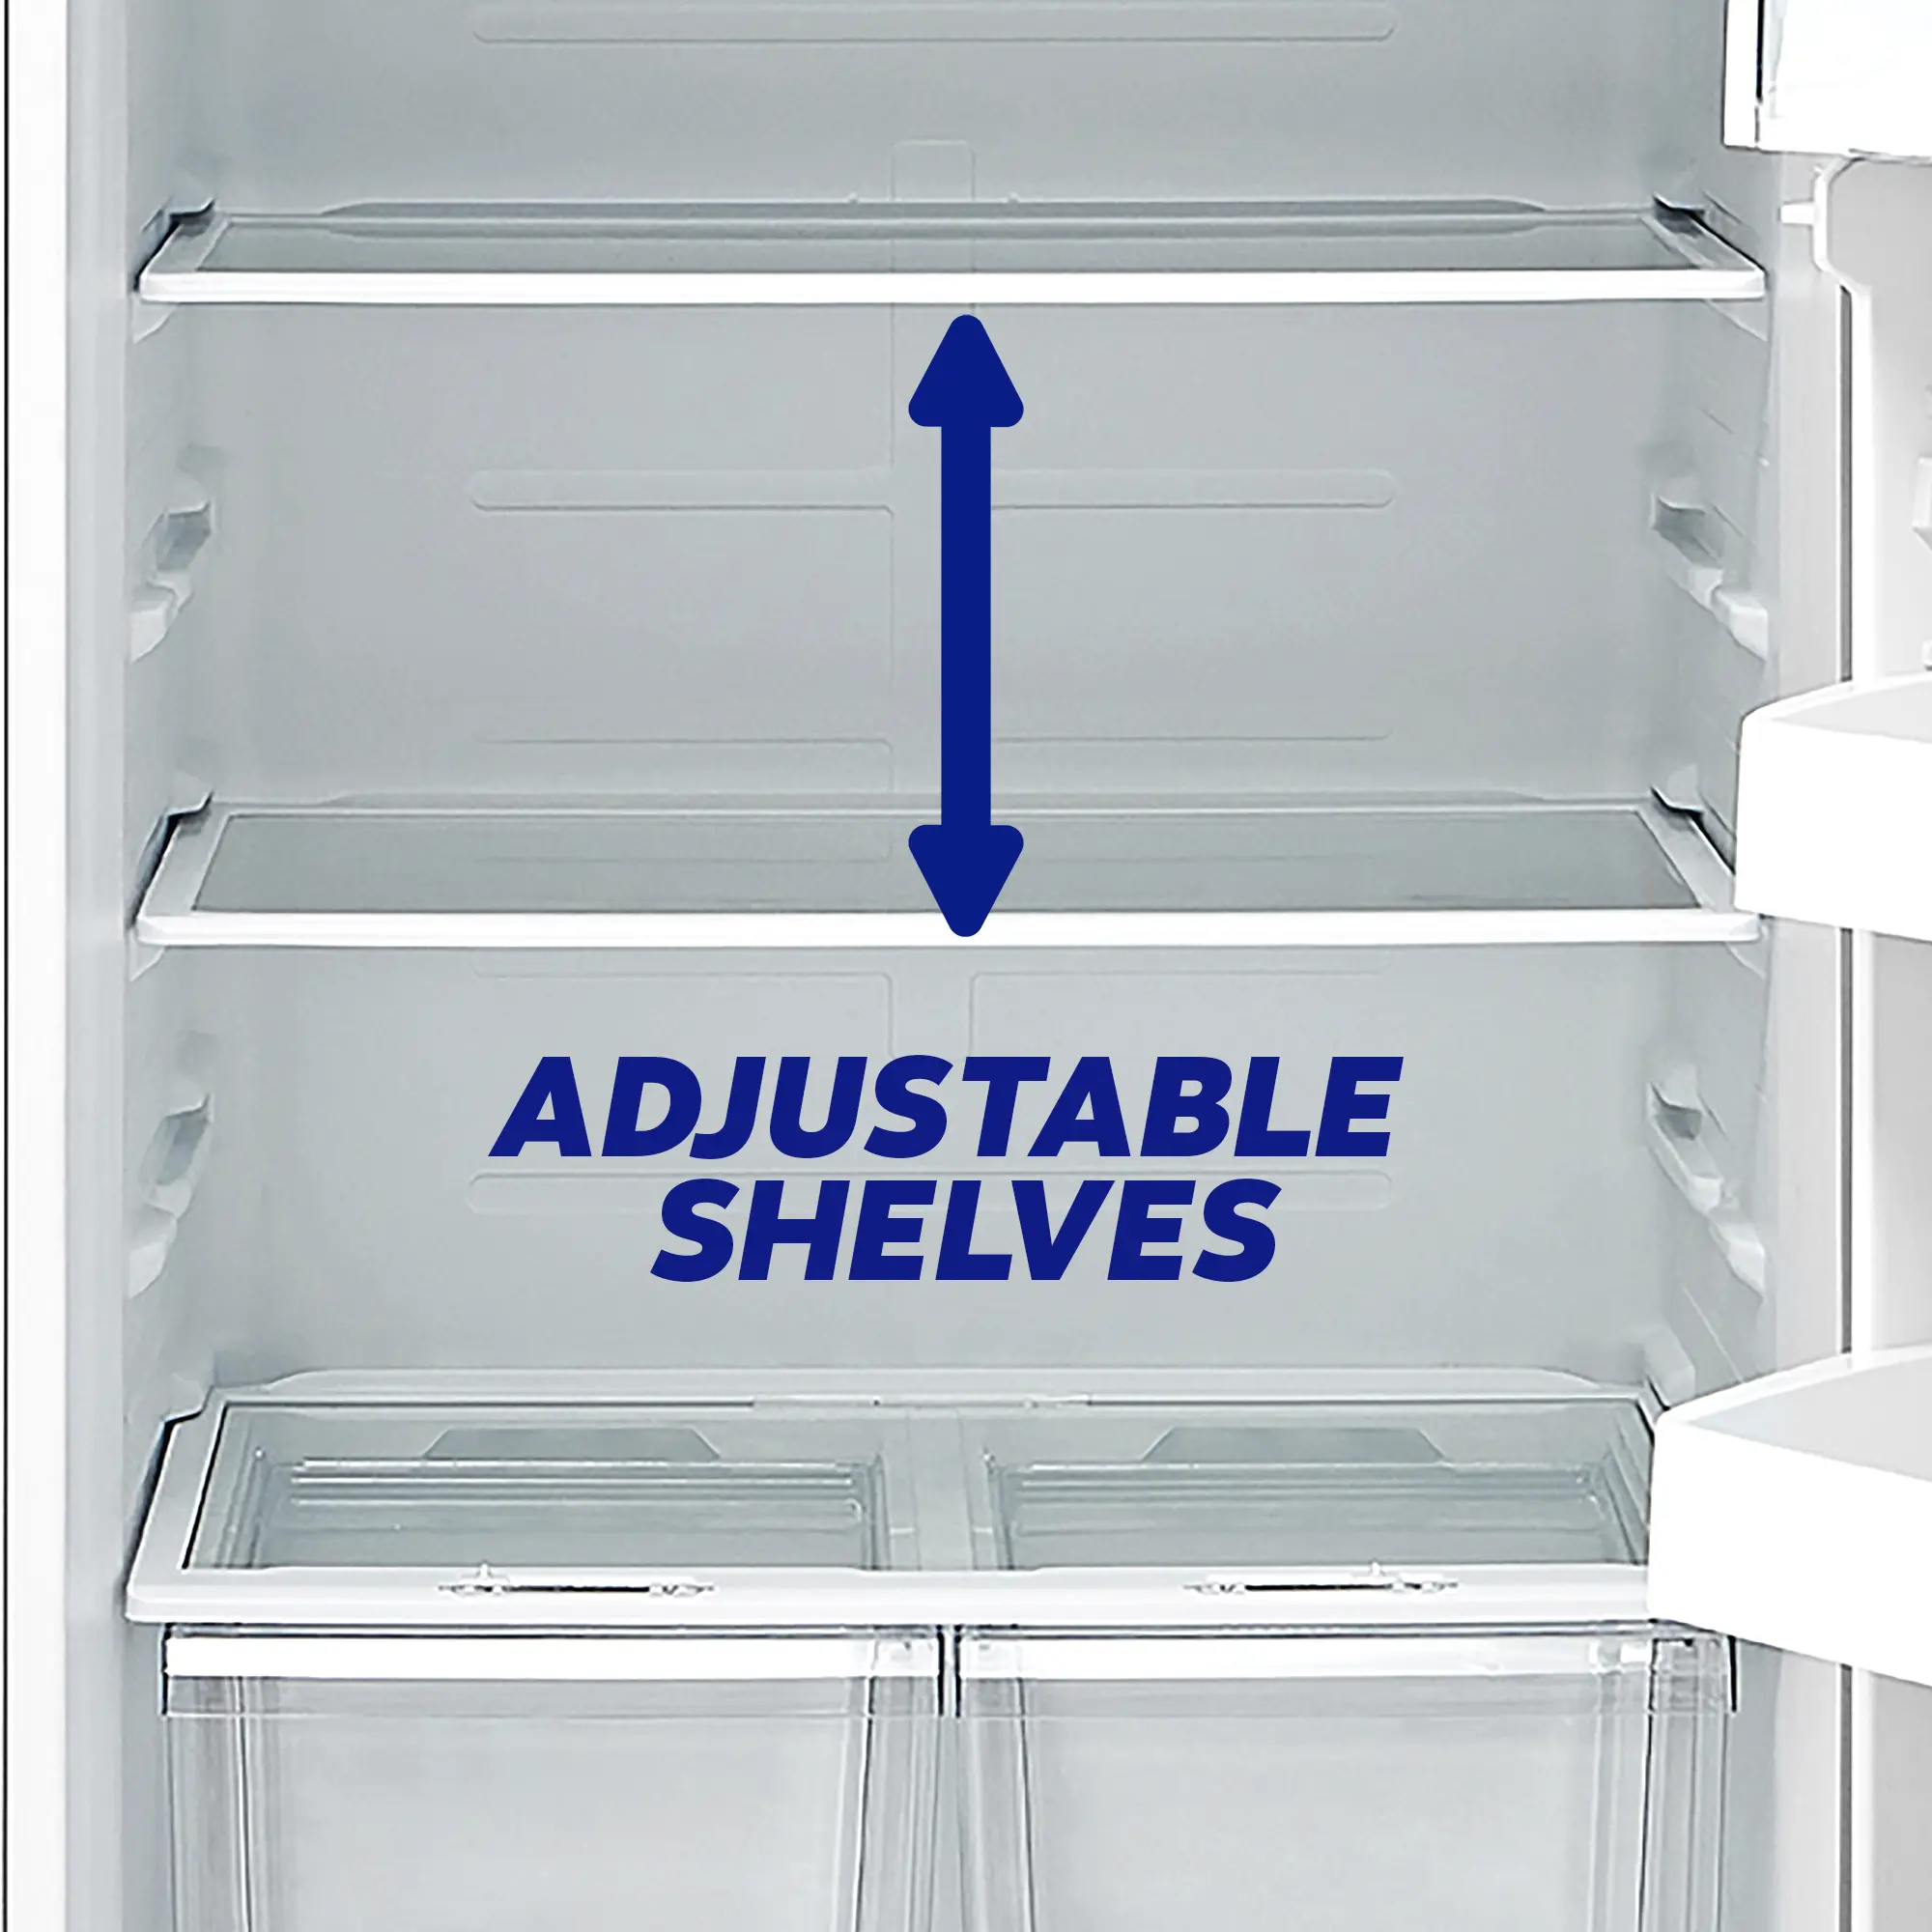 Adjustable fridge shelves